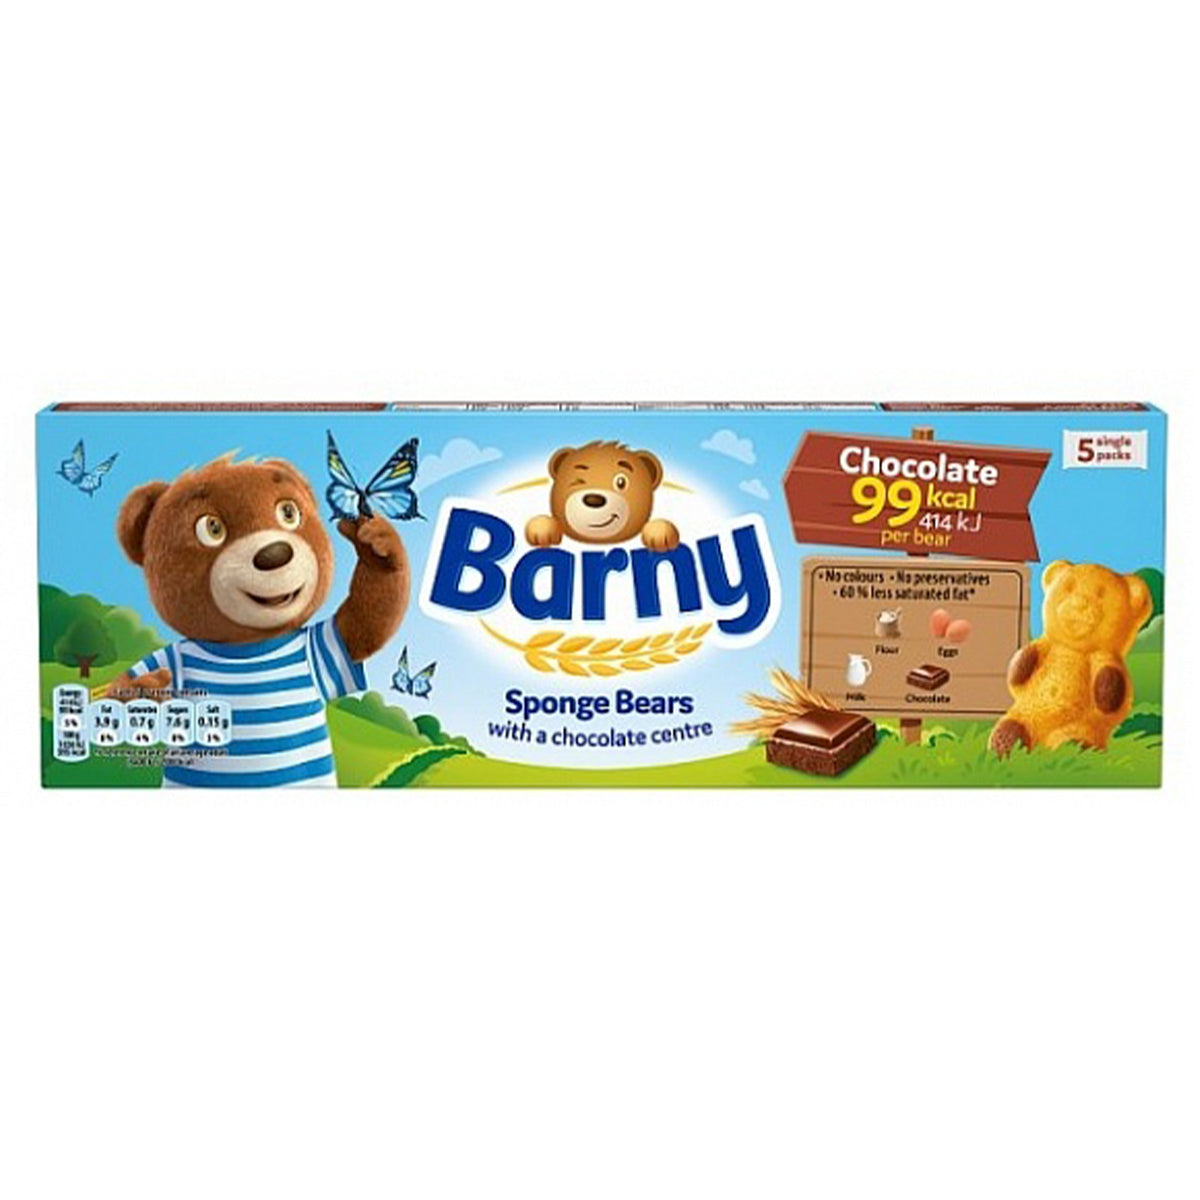 Barny's spruce bears chocolate bar.